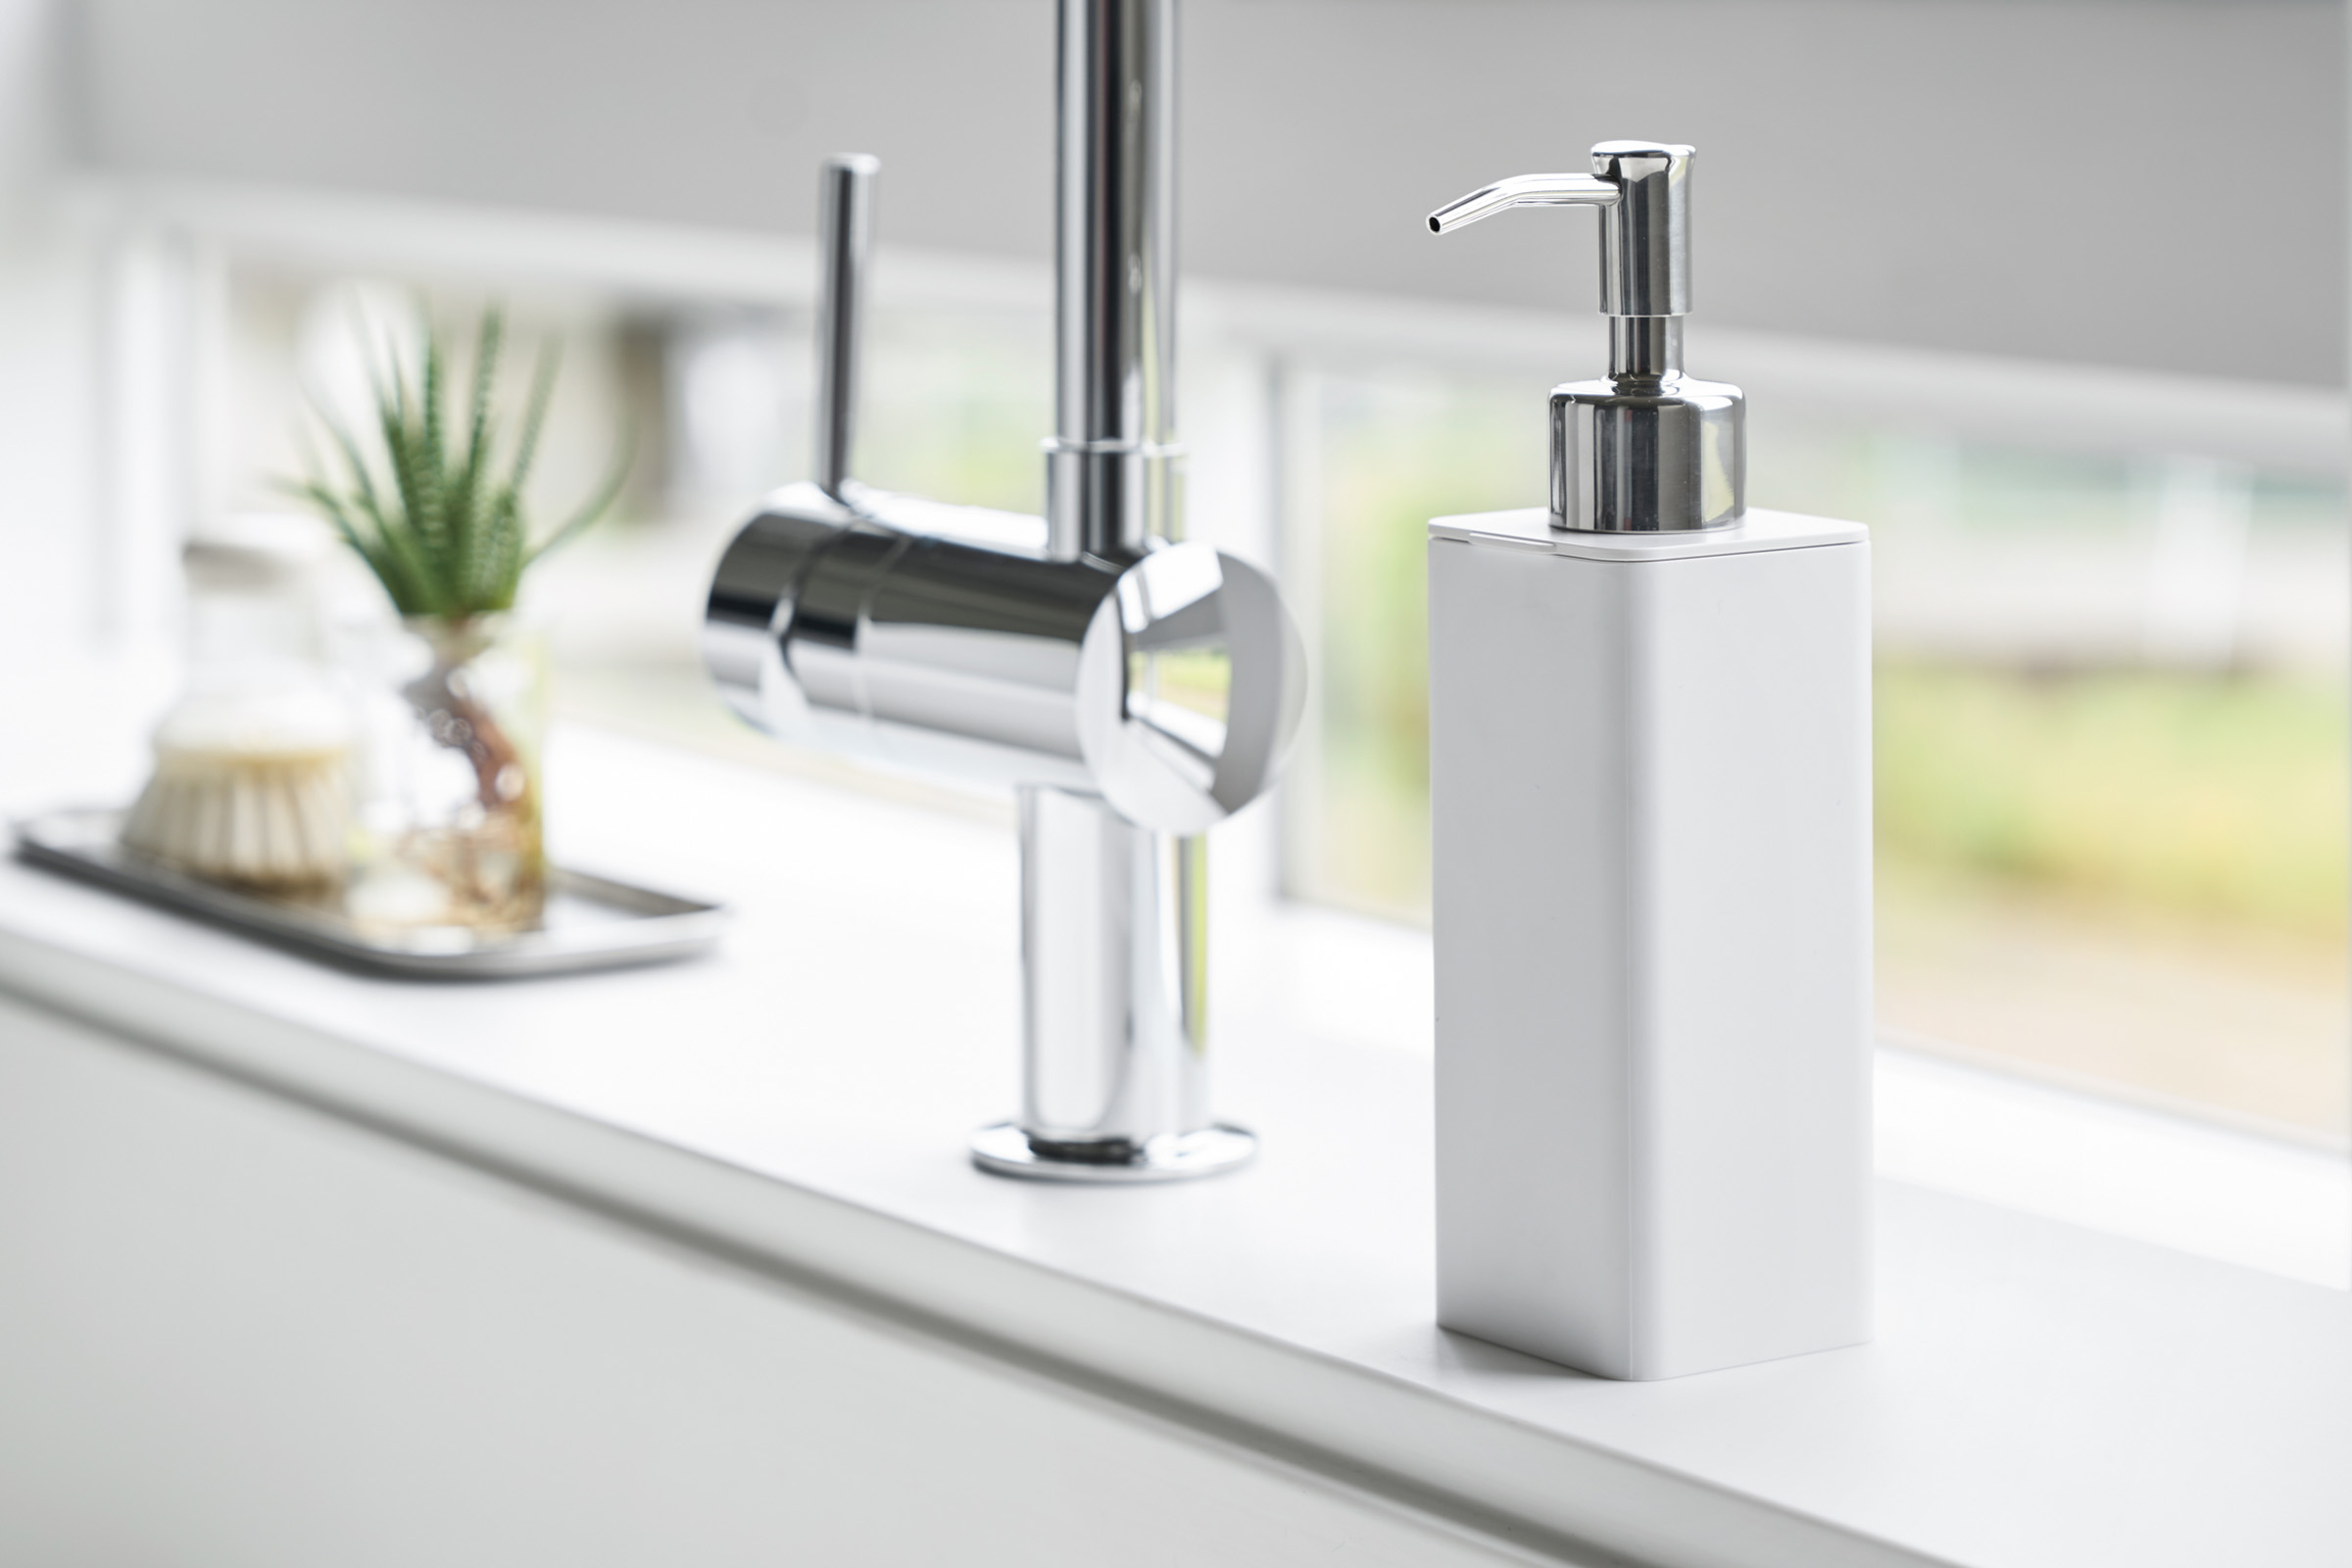 White Yamazaki Hand Soap Dispenser near a sink faucet